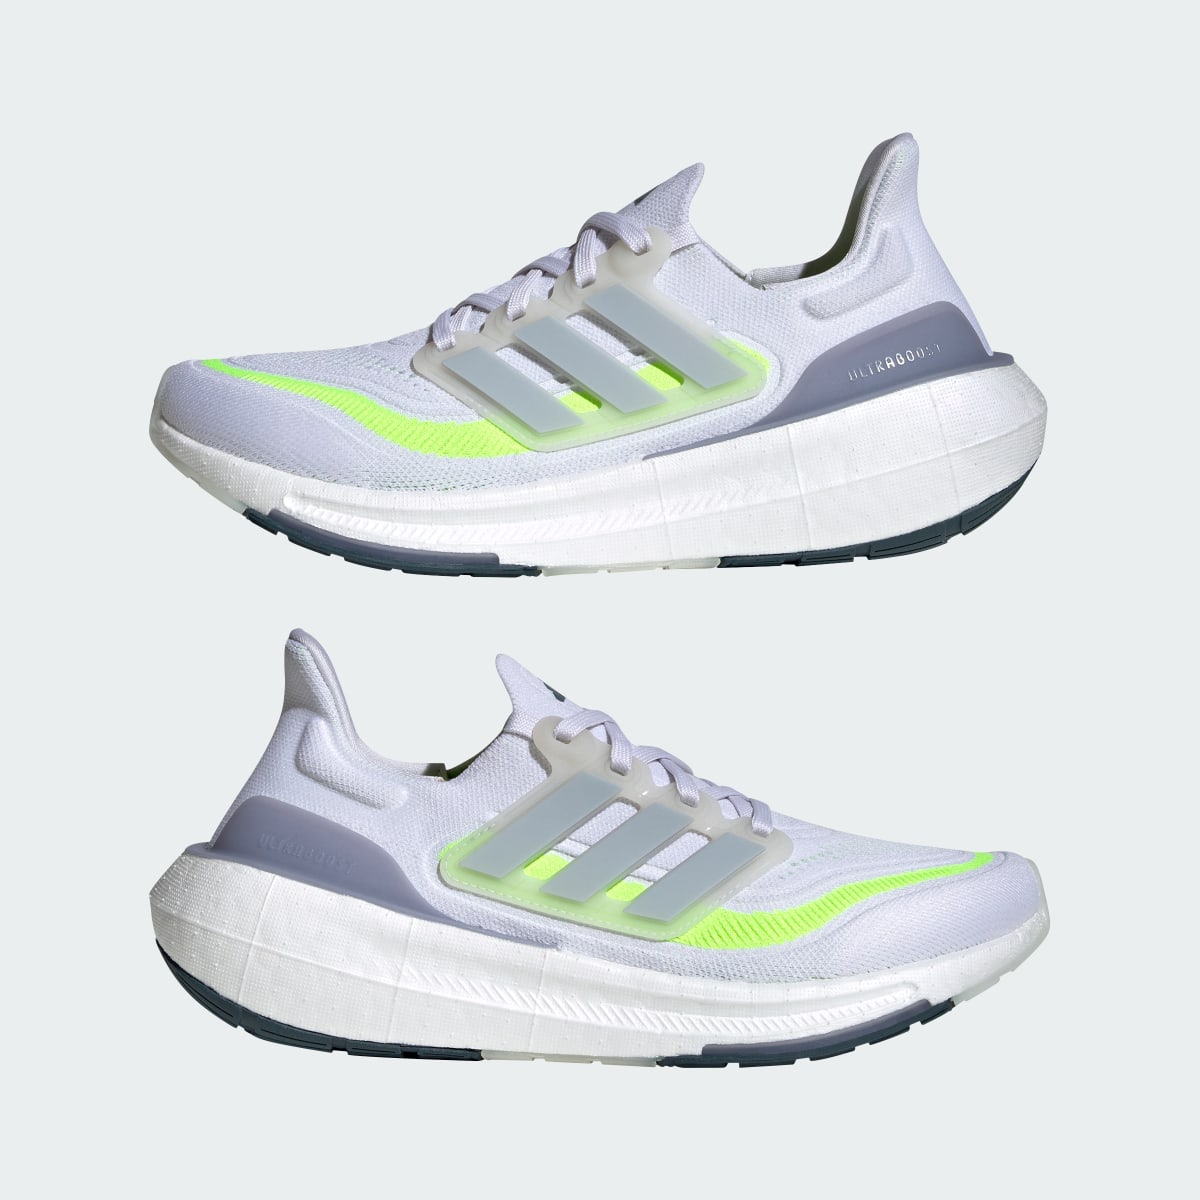 Adidas Ultraboost Light Shoes. 8